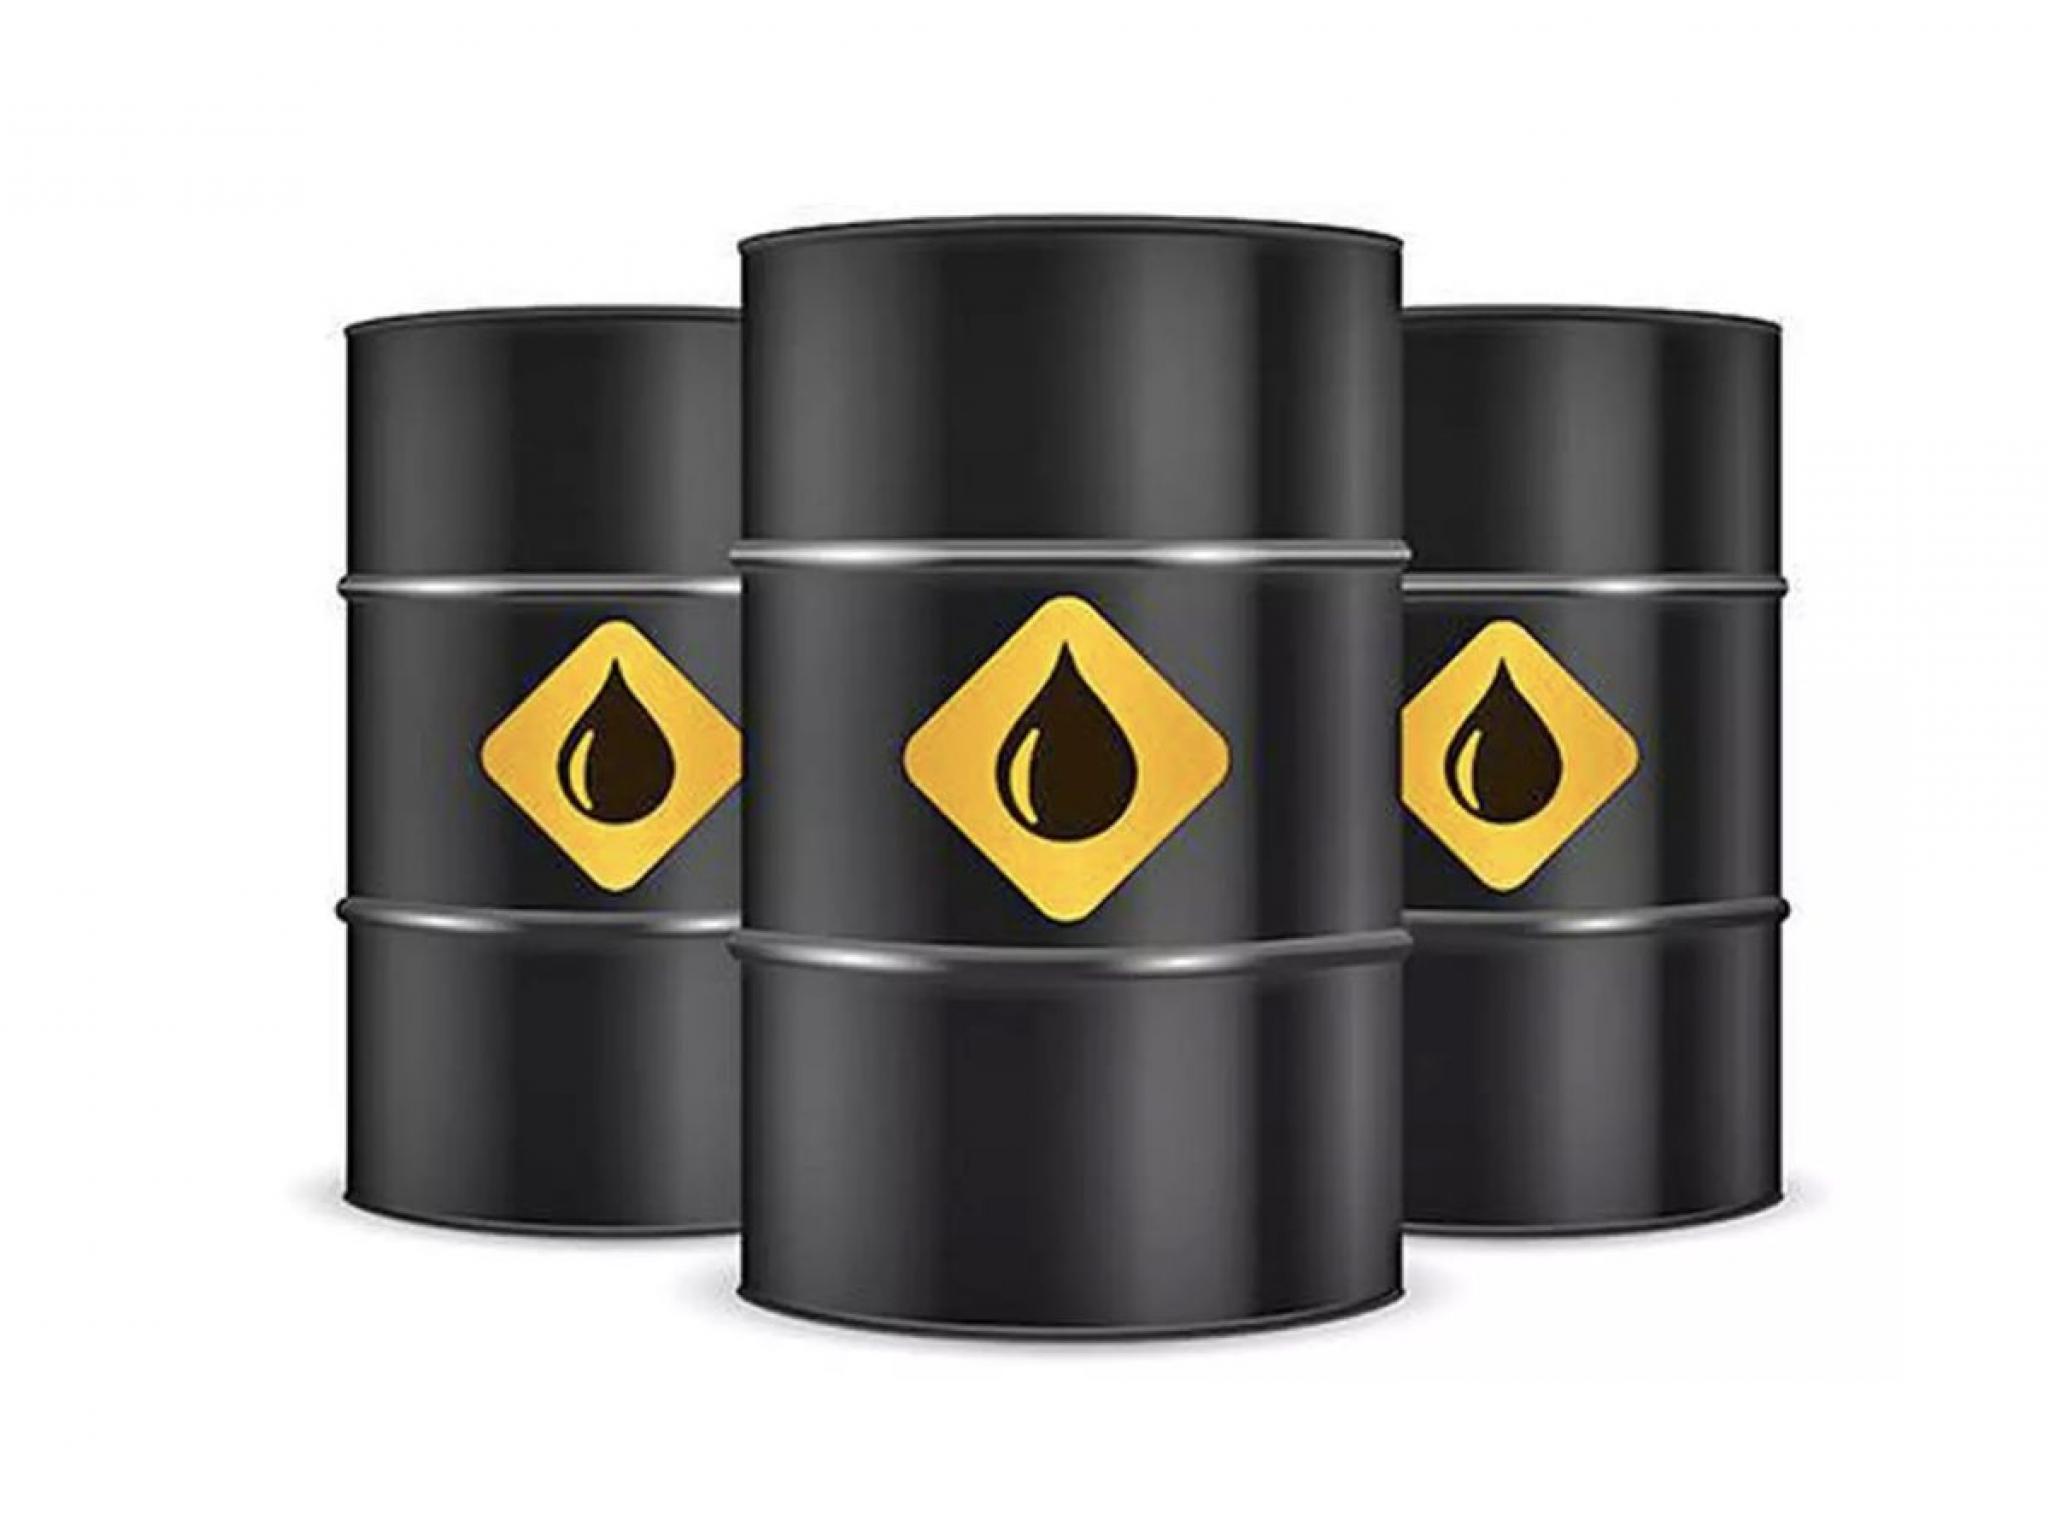  crude-oil-moves-higher-point-biopharma-global-shares-jump 